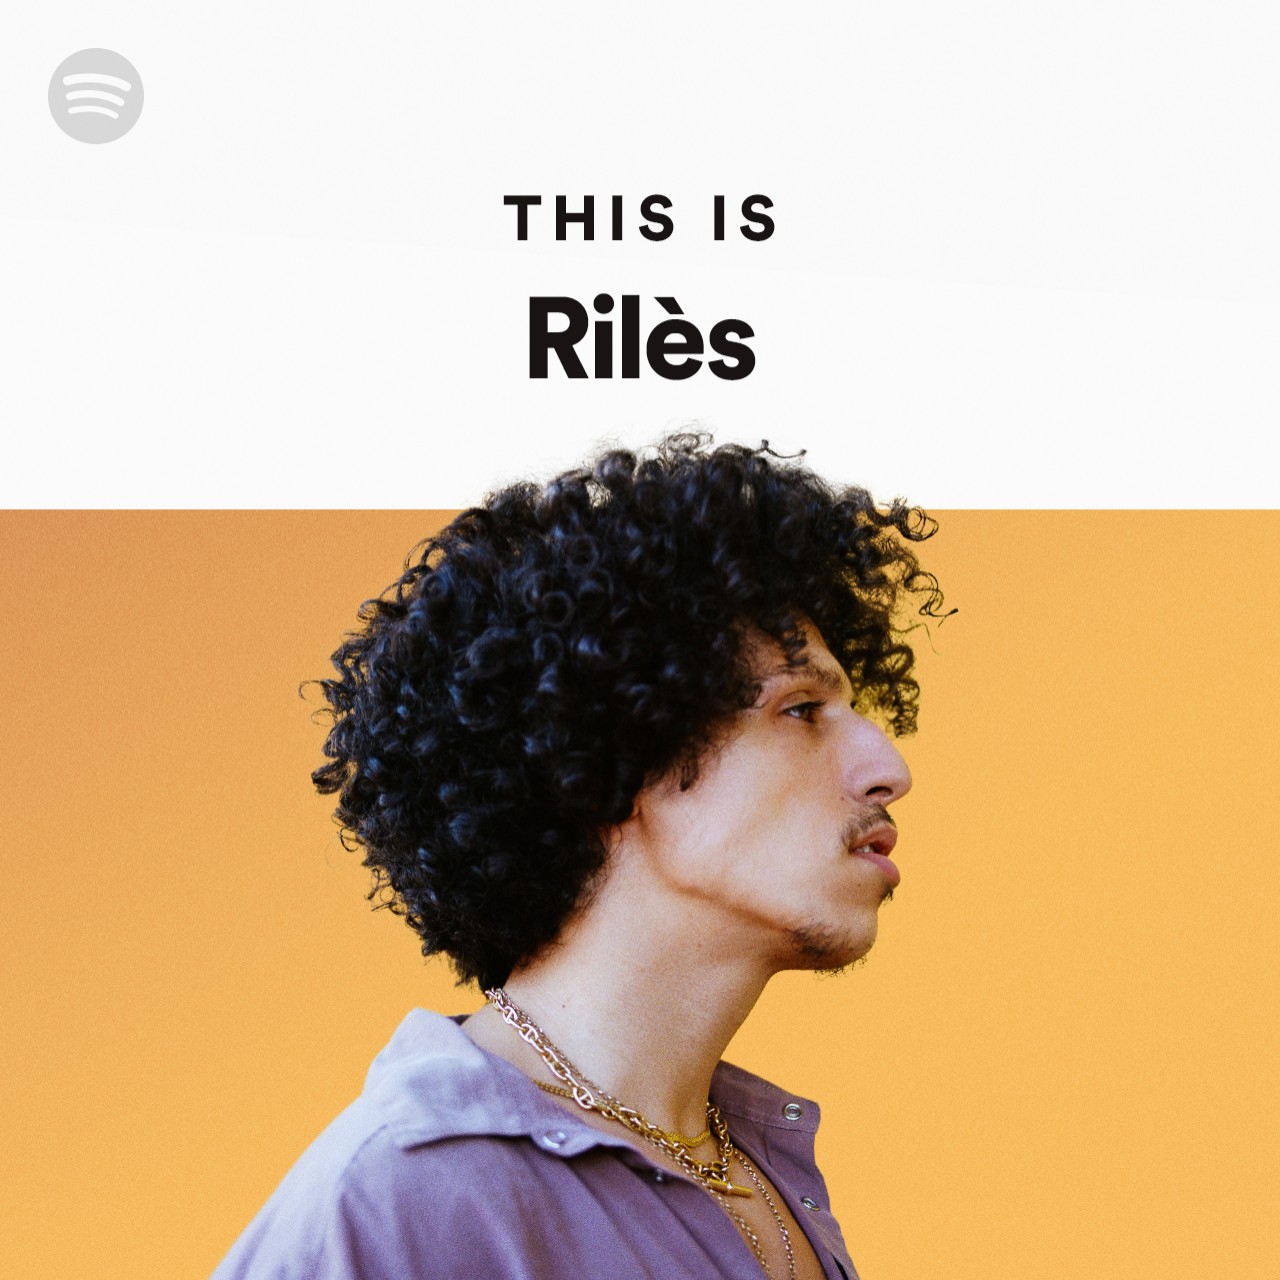 This Is Rilès